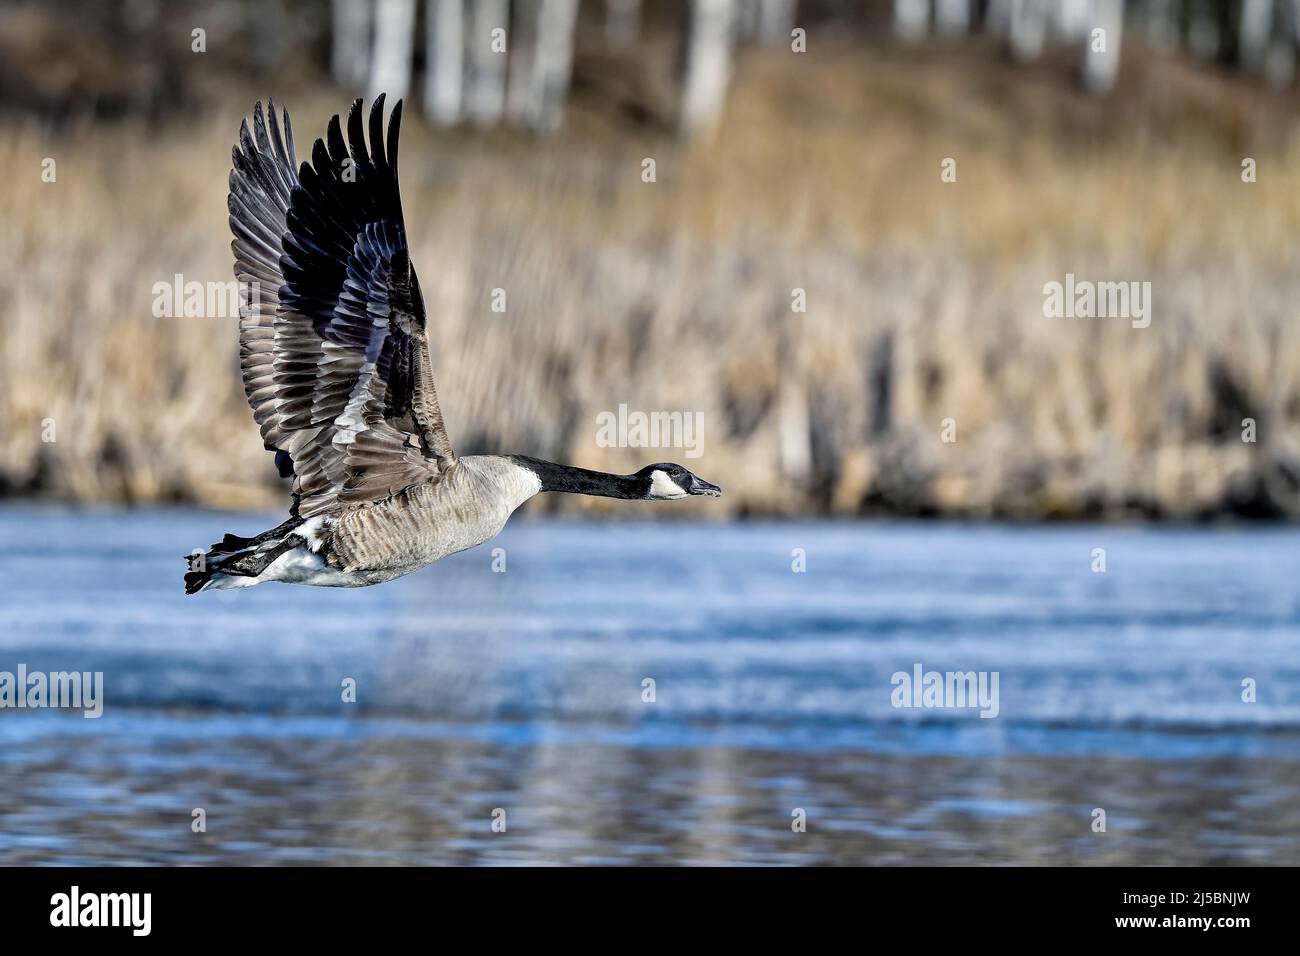 Canada goose in flight Stock Photo